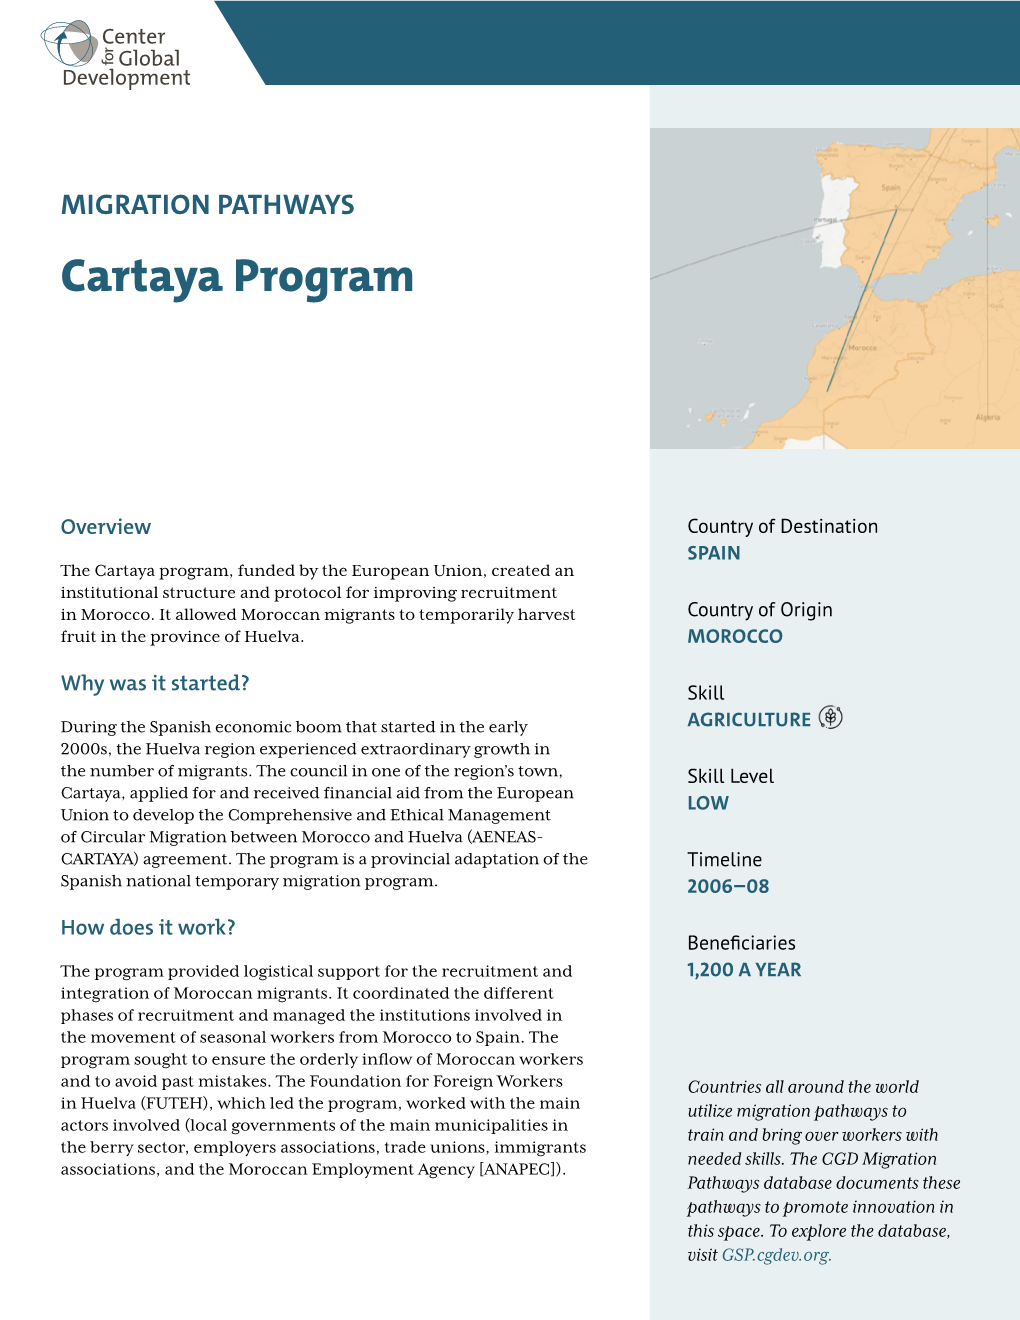 Cartaya Program